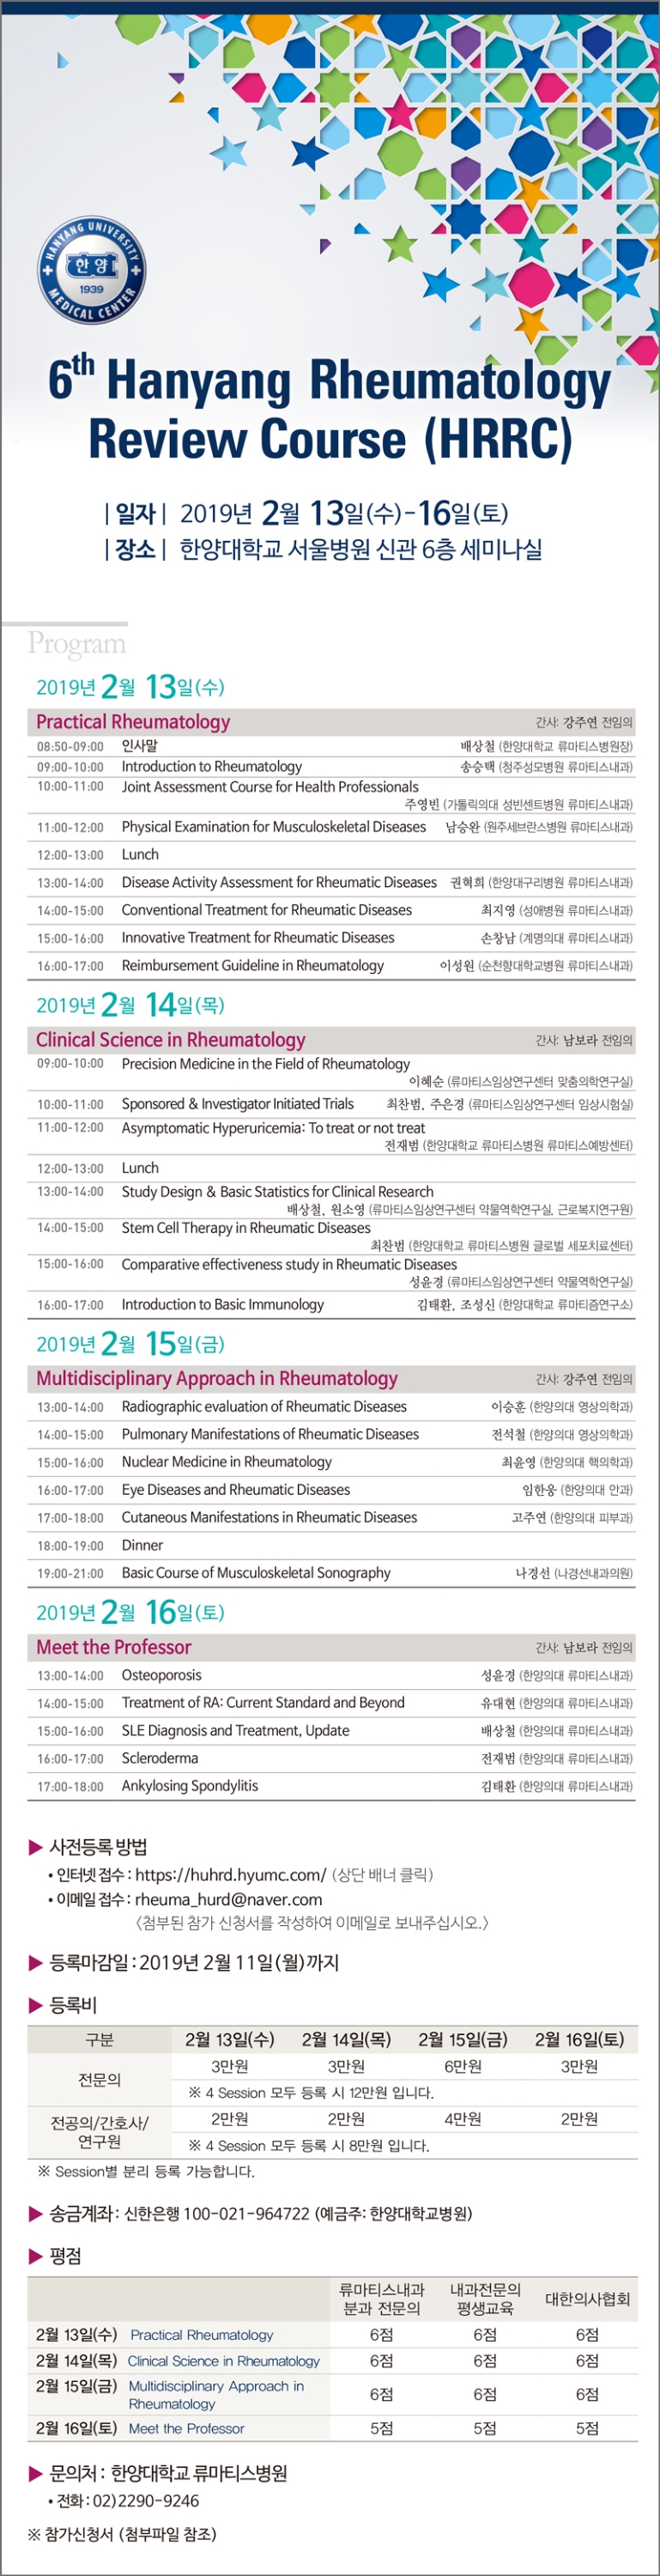 6th Hanyang Rheumatology Review Course (HRRC)